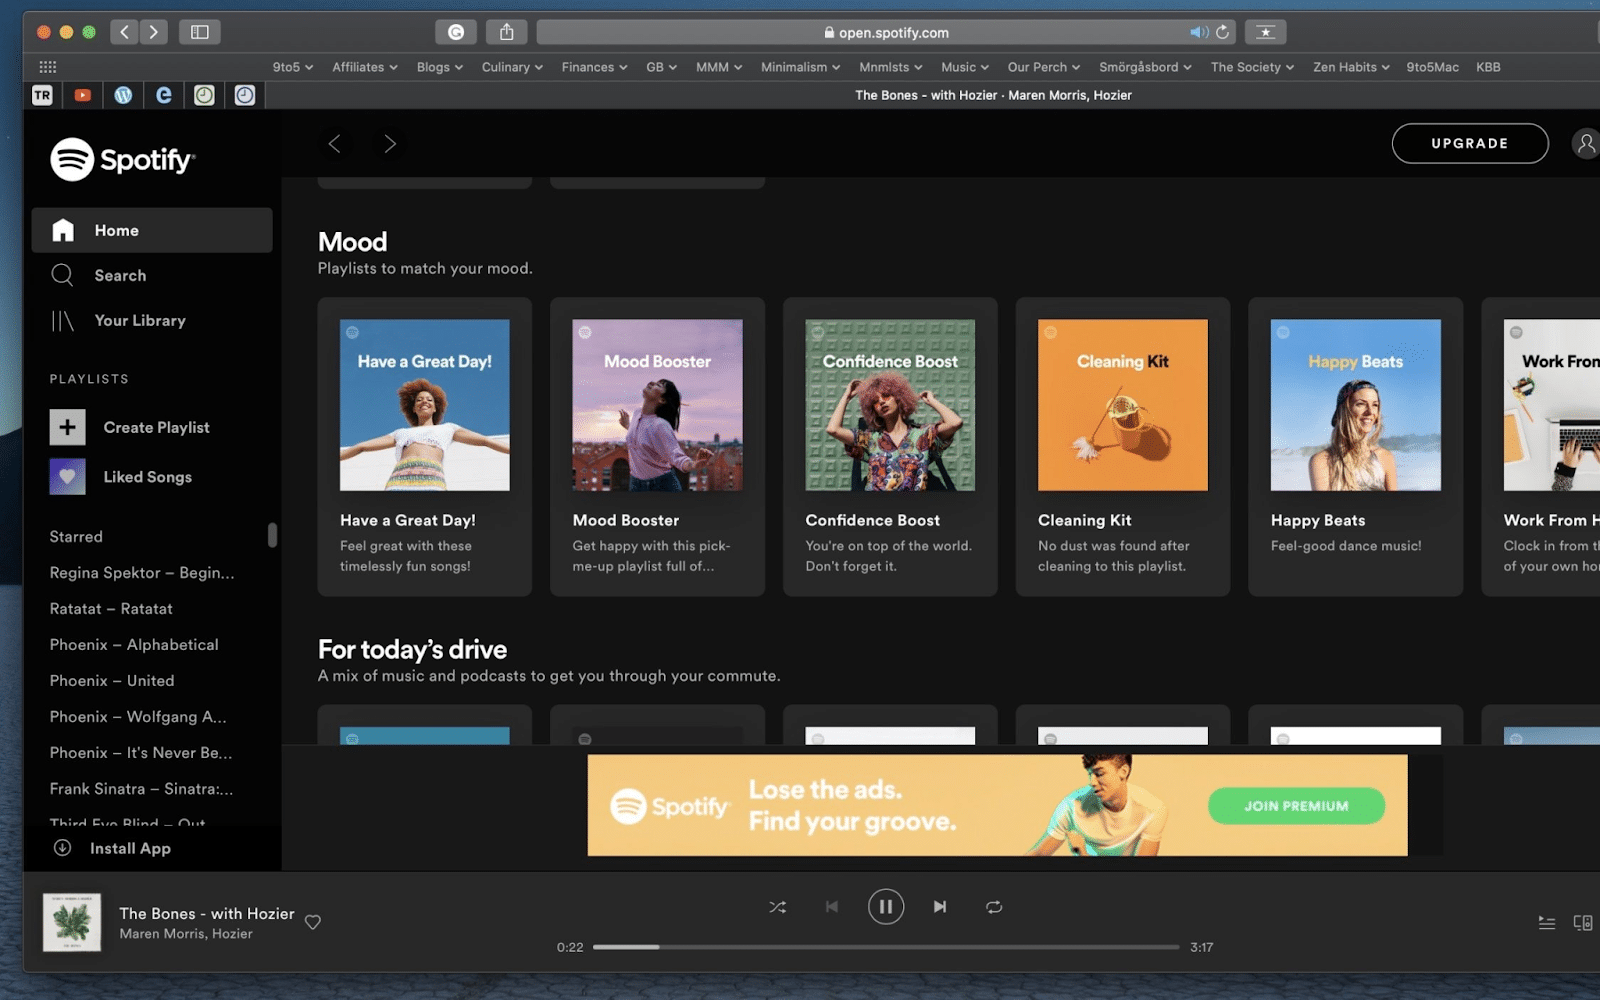 Spotify interface